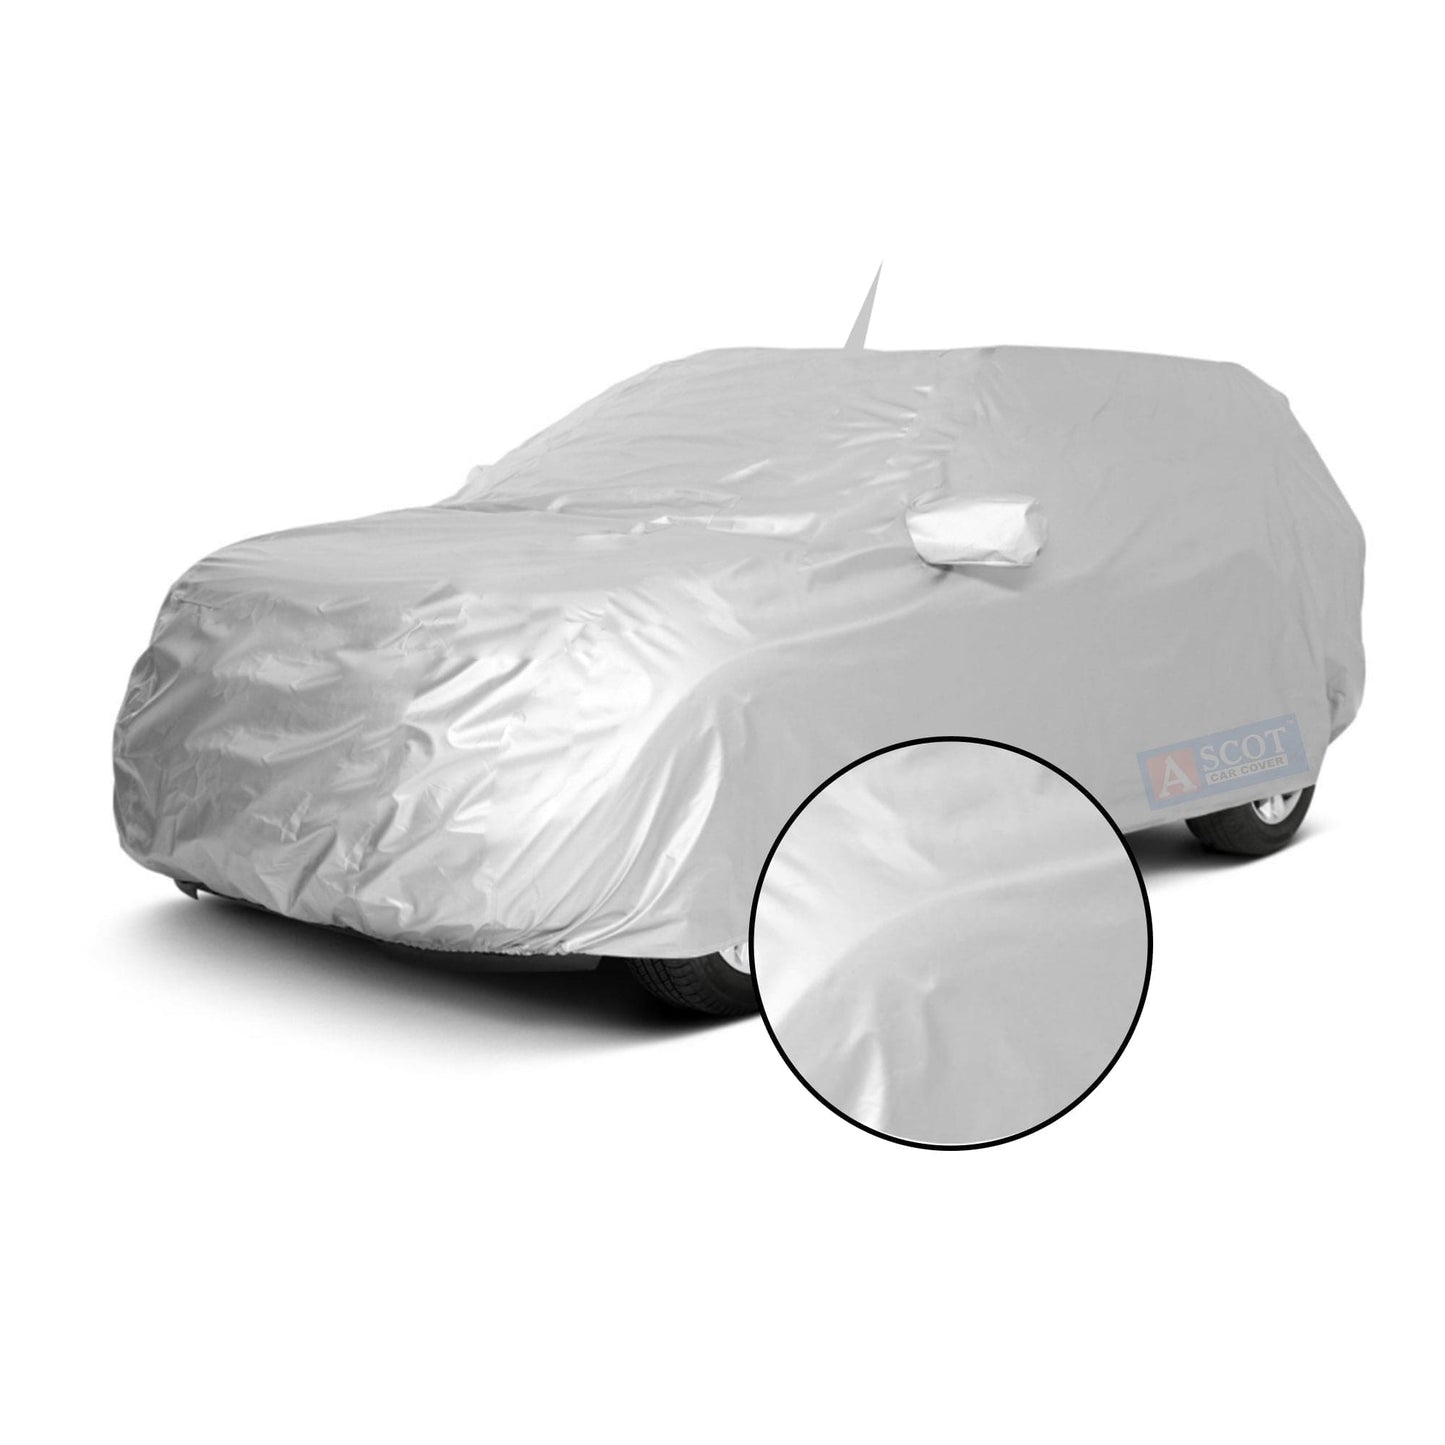 Ascot Hyundai Elantra Car Body Cover 2016-2021 Model Dust Proof, Trippel Stitched